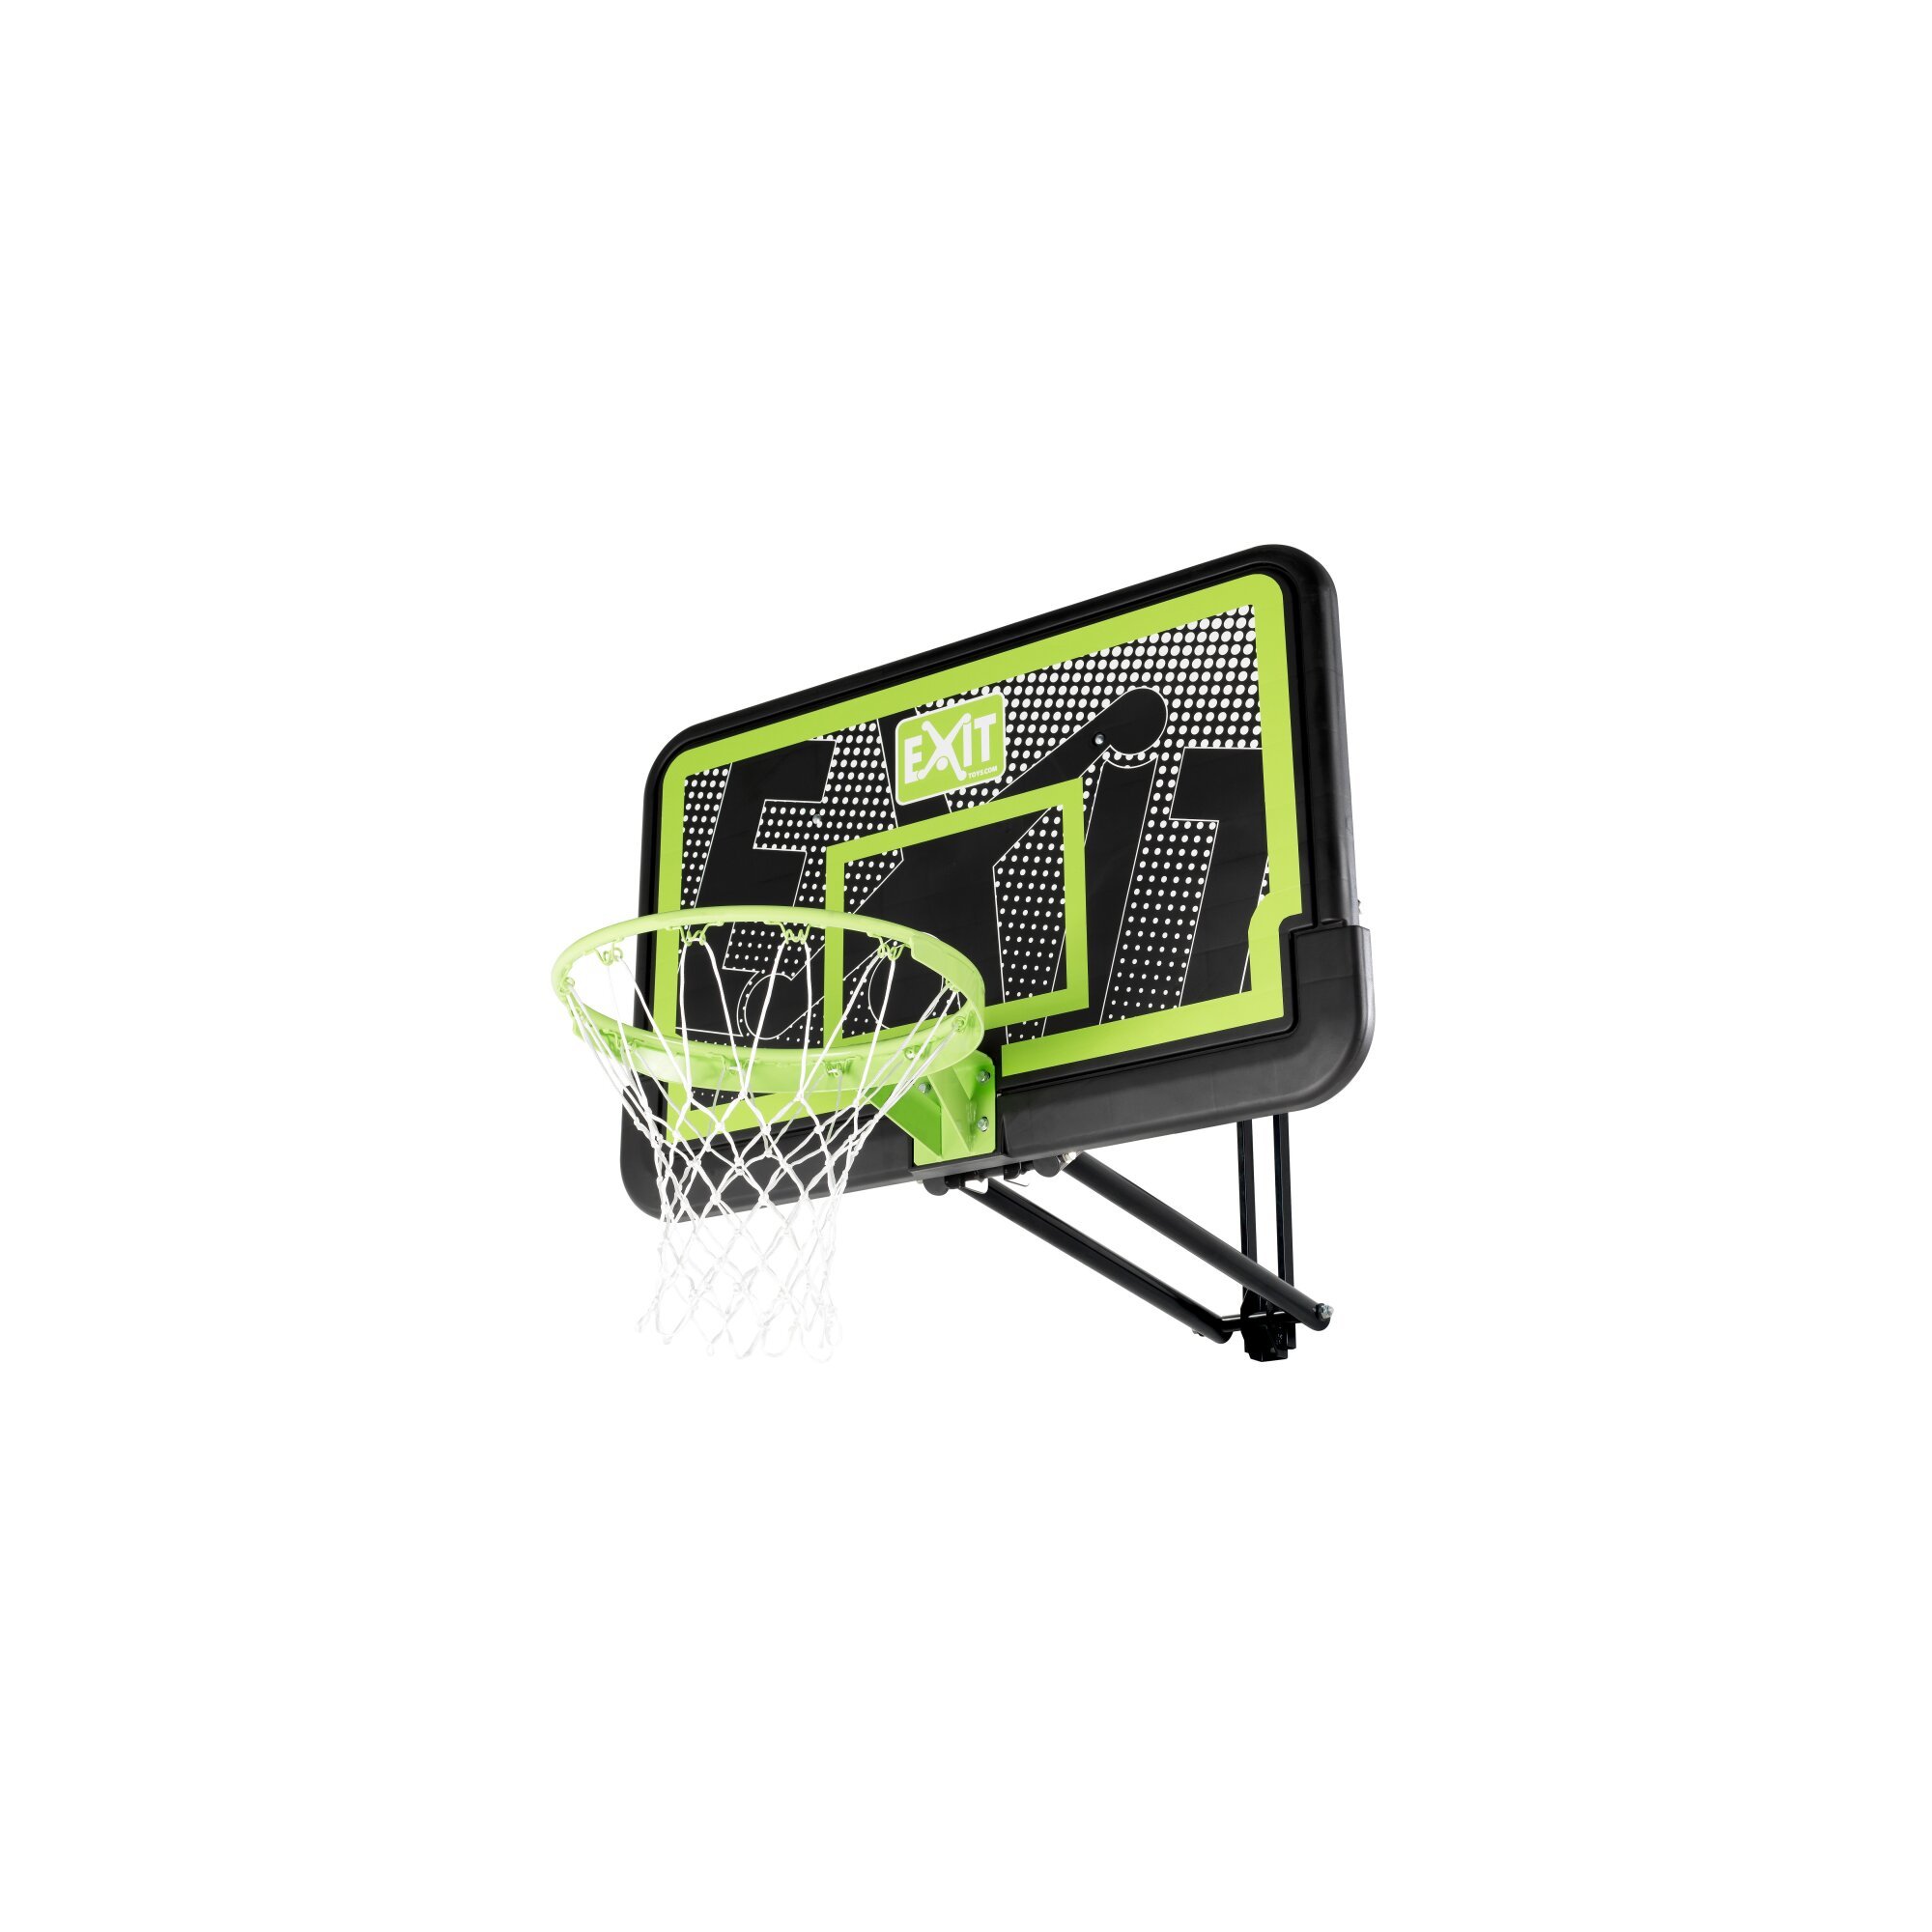 EXIT - Galaxy wall-mounted basketball backboard - black edition (46.11.10.00) - Leker